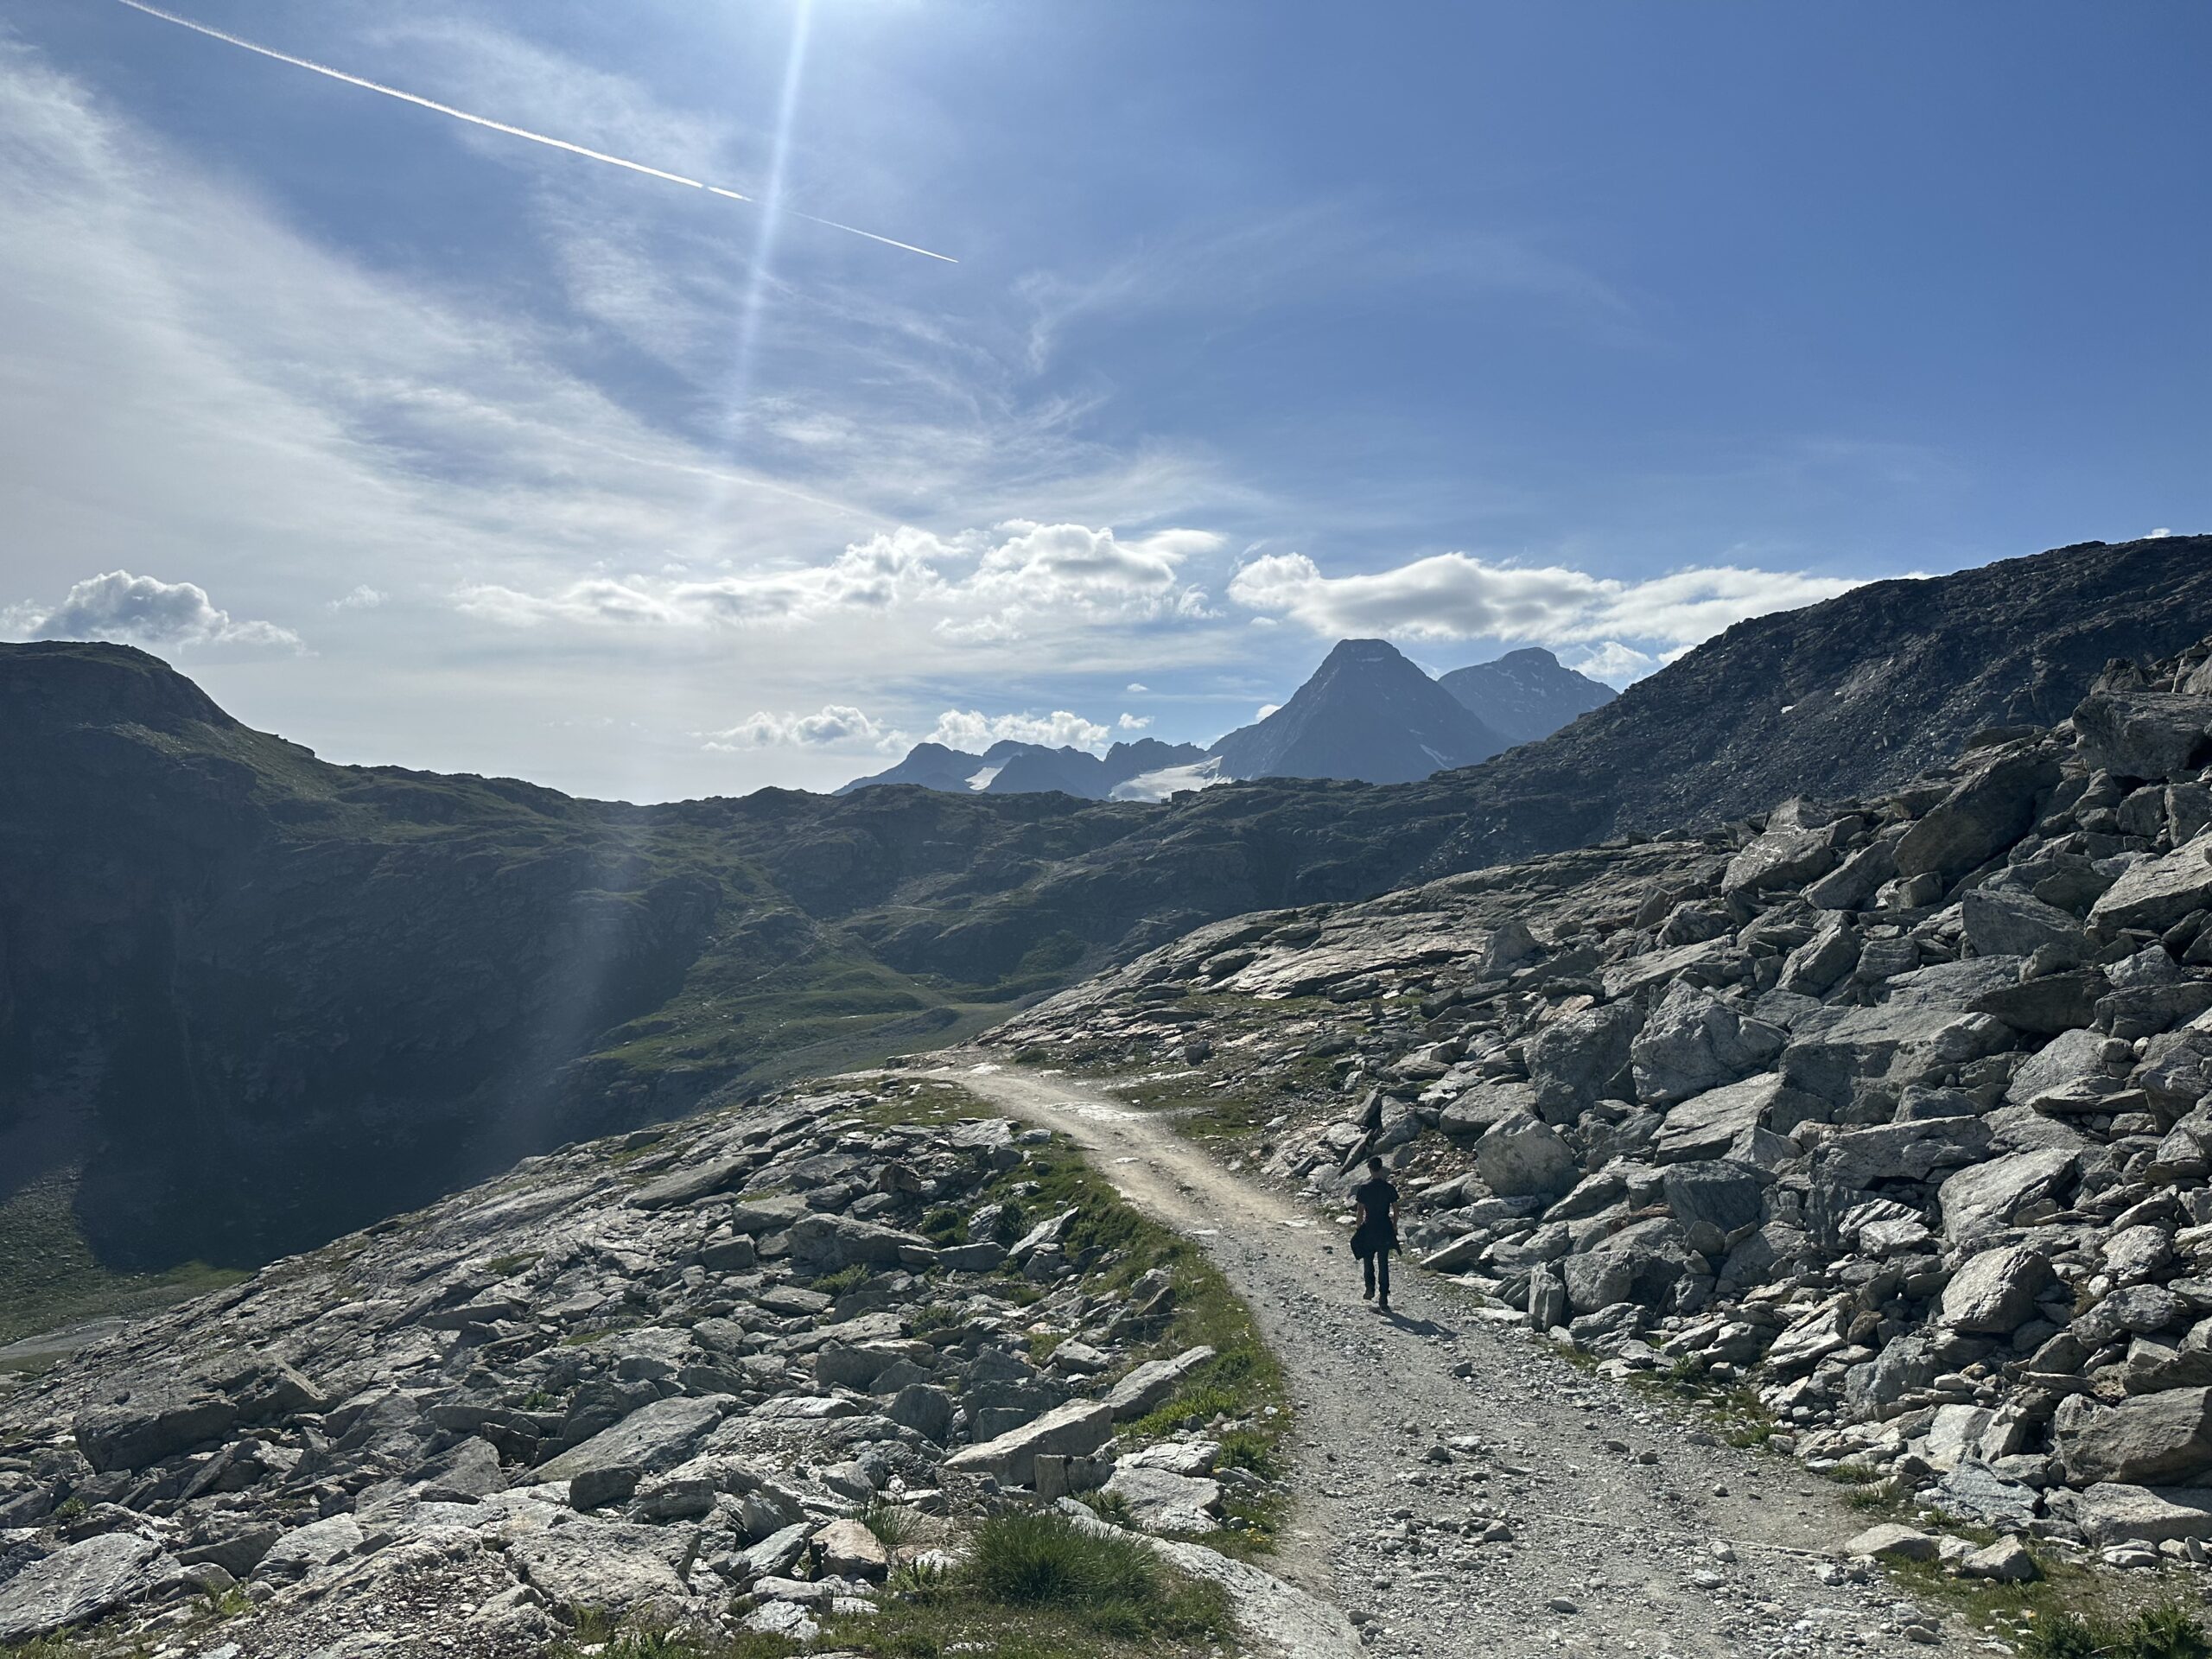 View of hiking trail across rocky alpine terrain.